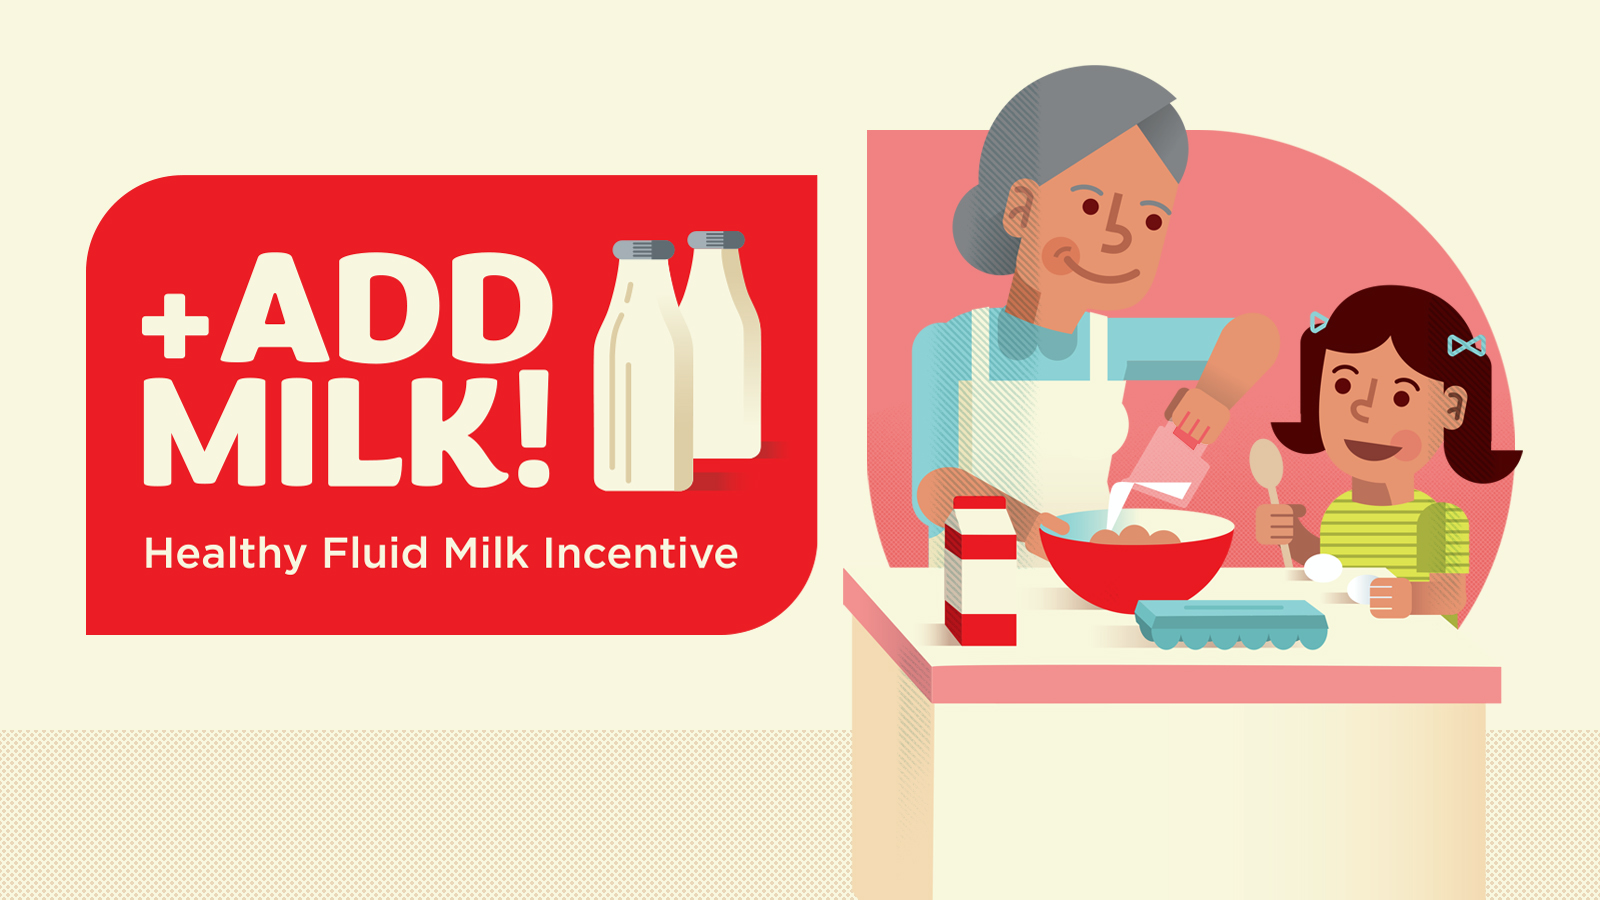 Add Milk - about the program